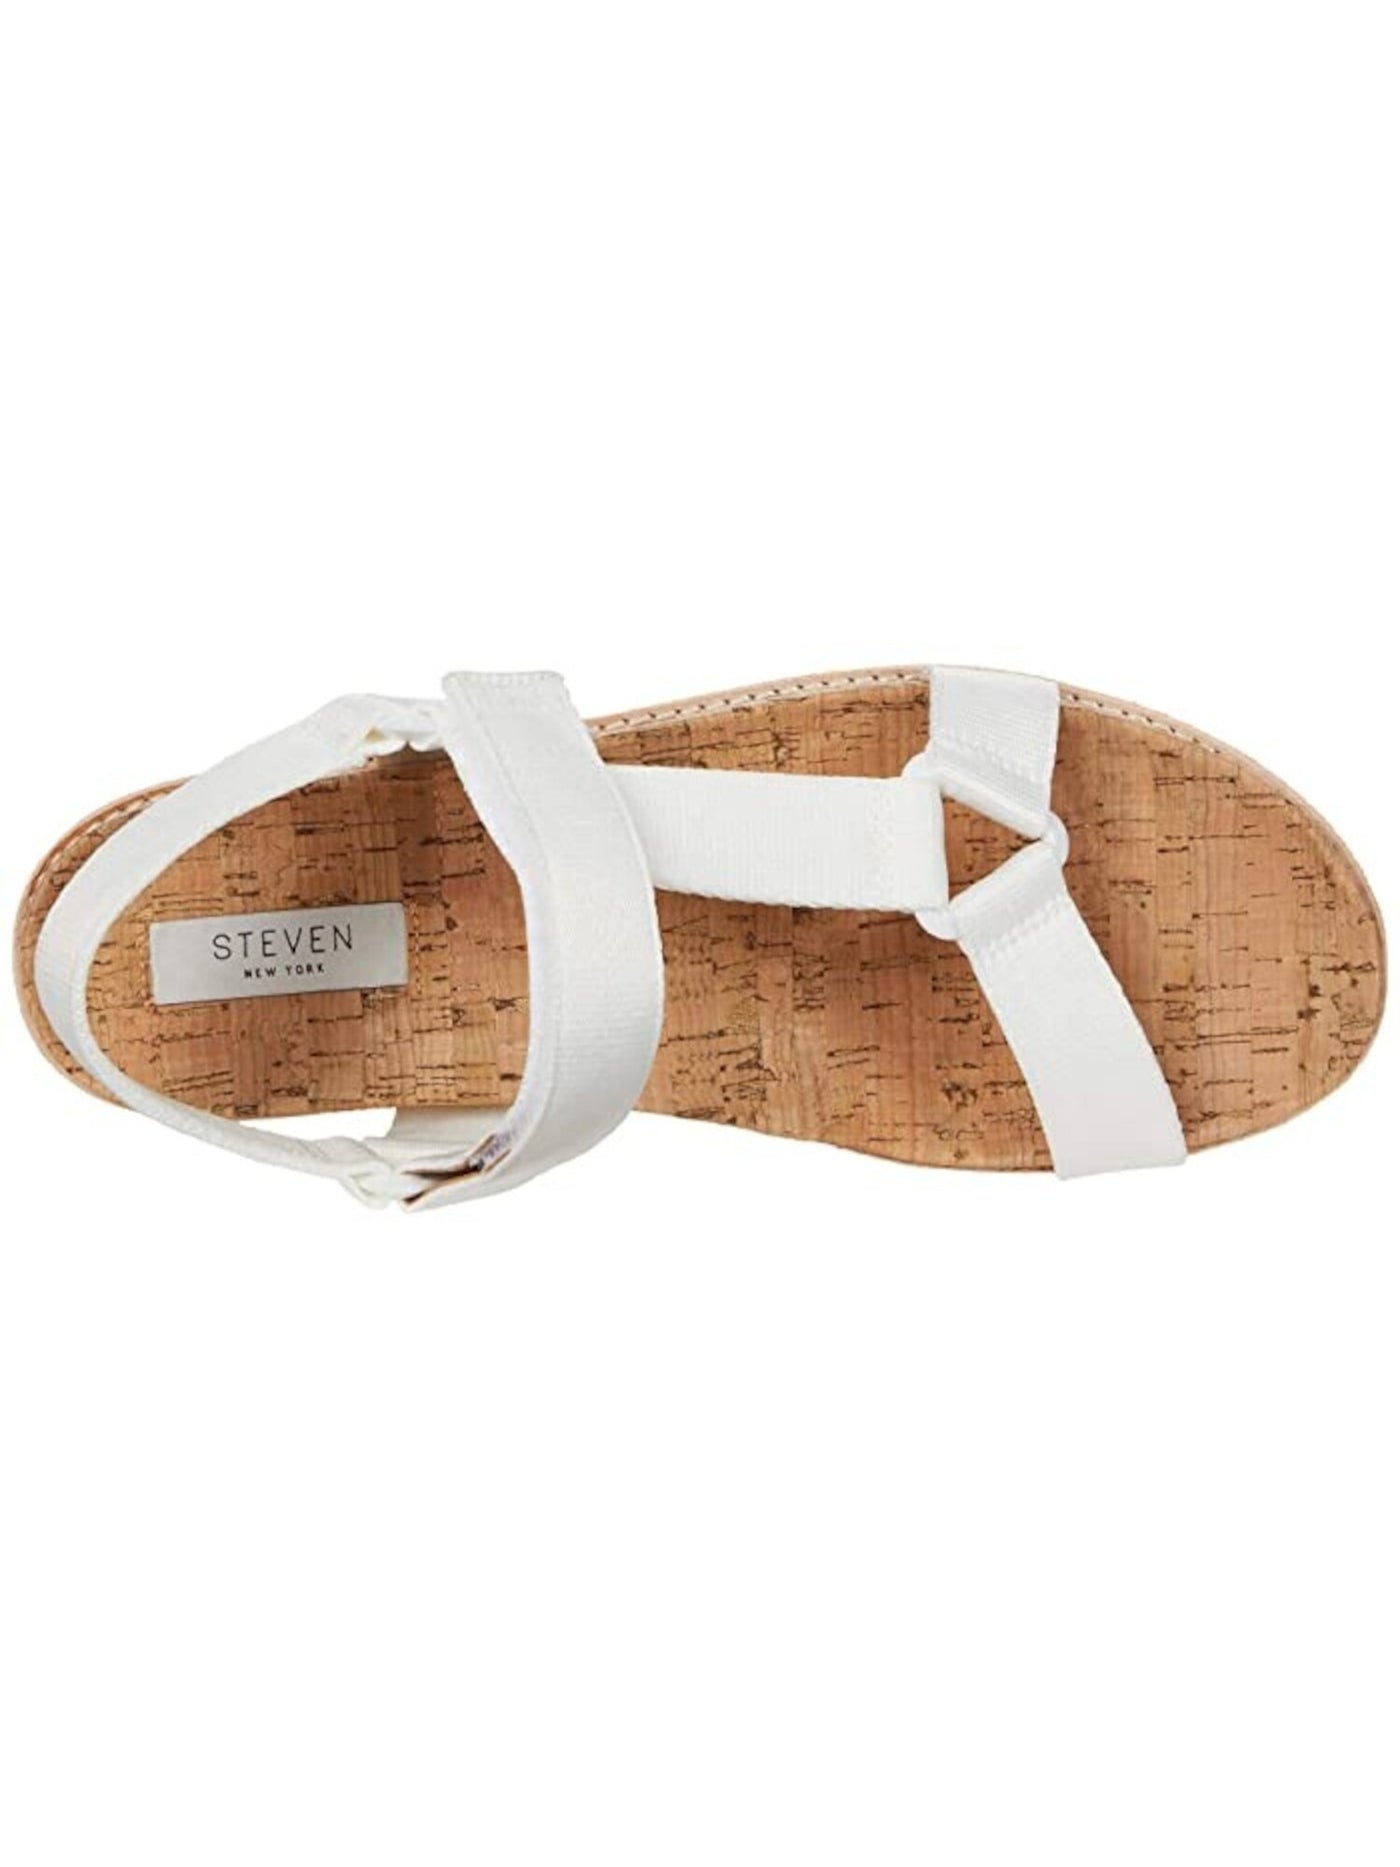 STEVEN NEW YORK Womens White Cork-Like Foot Bed Adjustable Strap Strappy Belmar Round Toe Platform Sandals Shoes 9.5 M